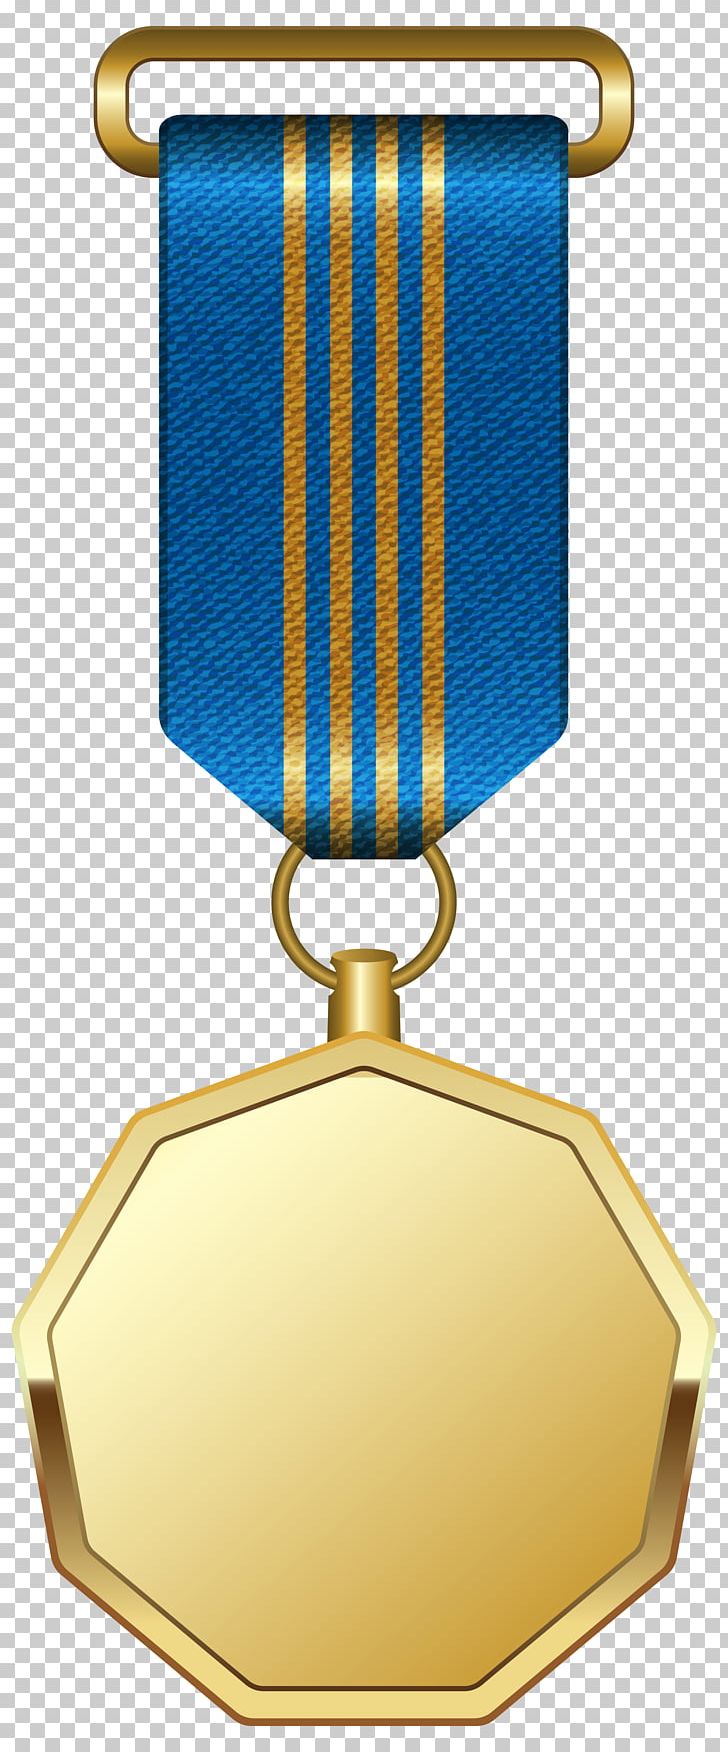 Gold Medal Ribbon PNG, Clipart, Award, Blue Ribbon, Clip Art, Gold, Gold Medal Free PNG Download